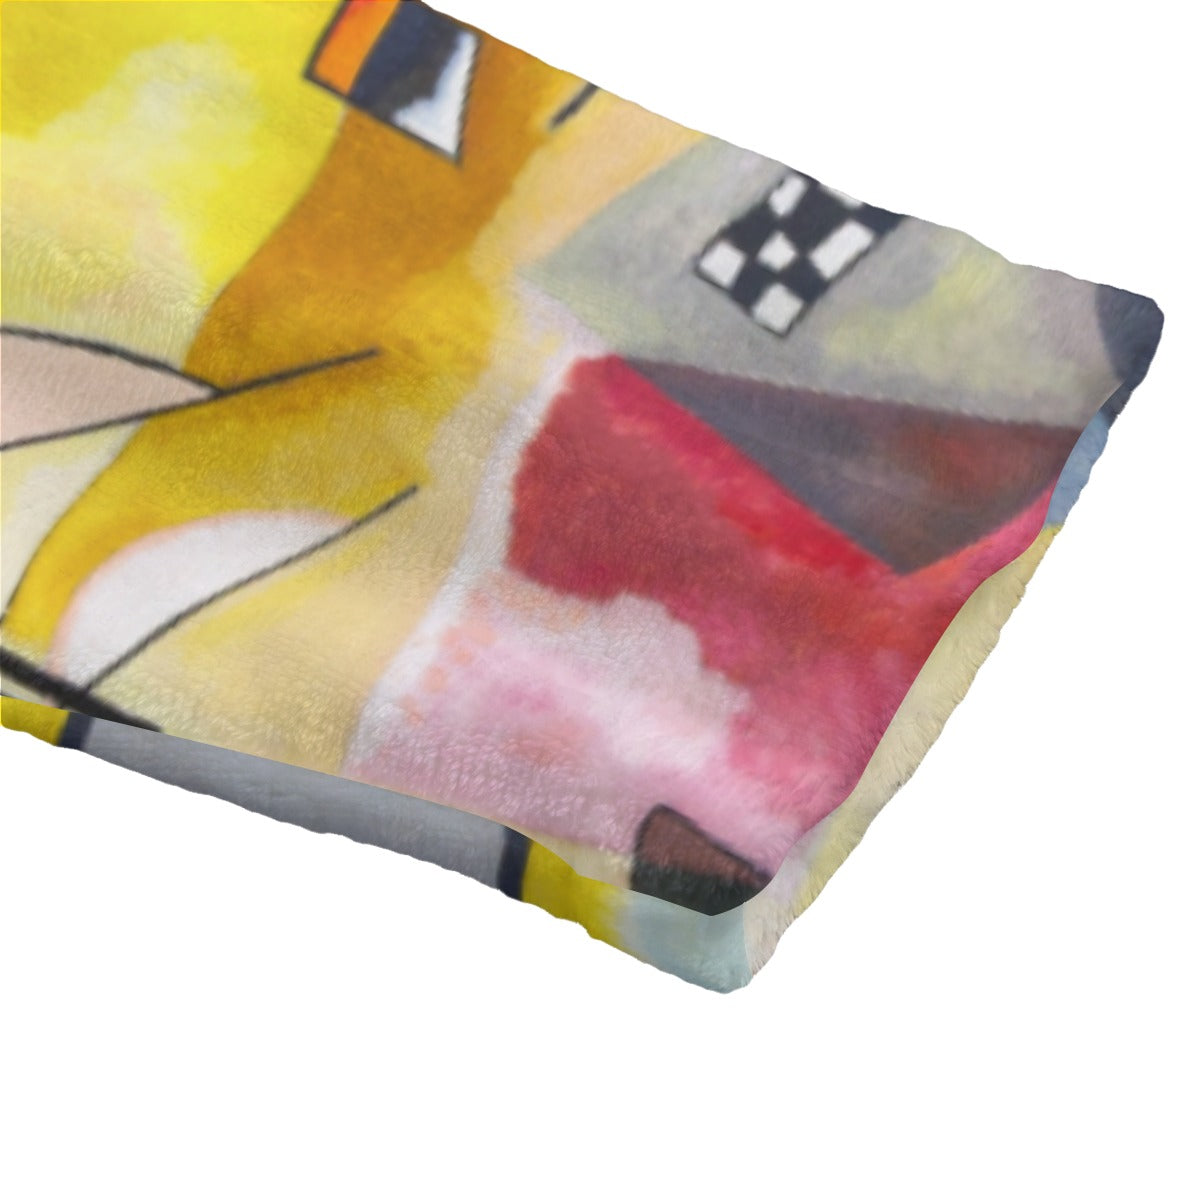 Kandinsky Inspired Fashion - Close-Up Detail